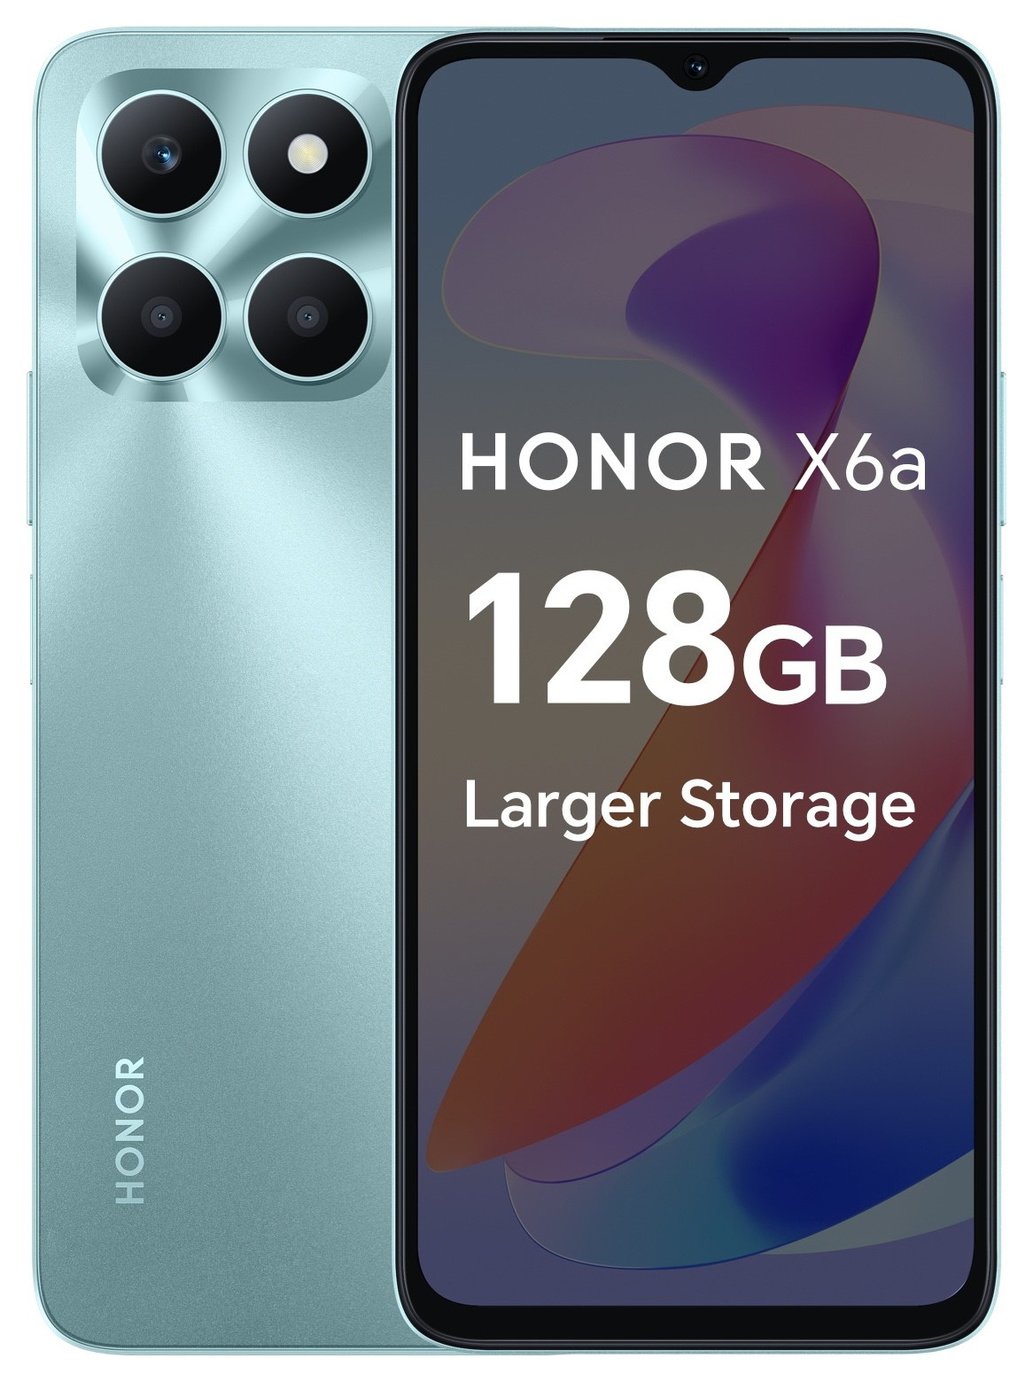 SIM Free HONOR X6a 128GB Mobile Phone - Cyan